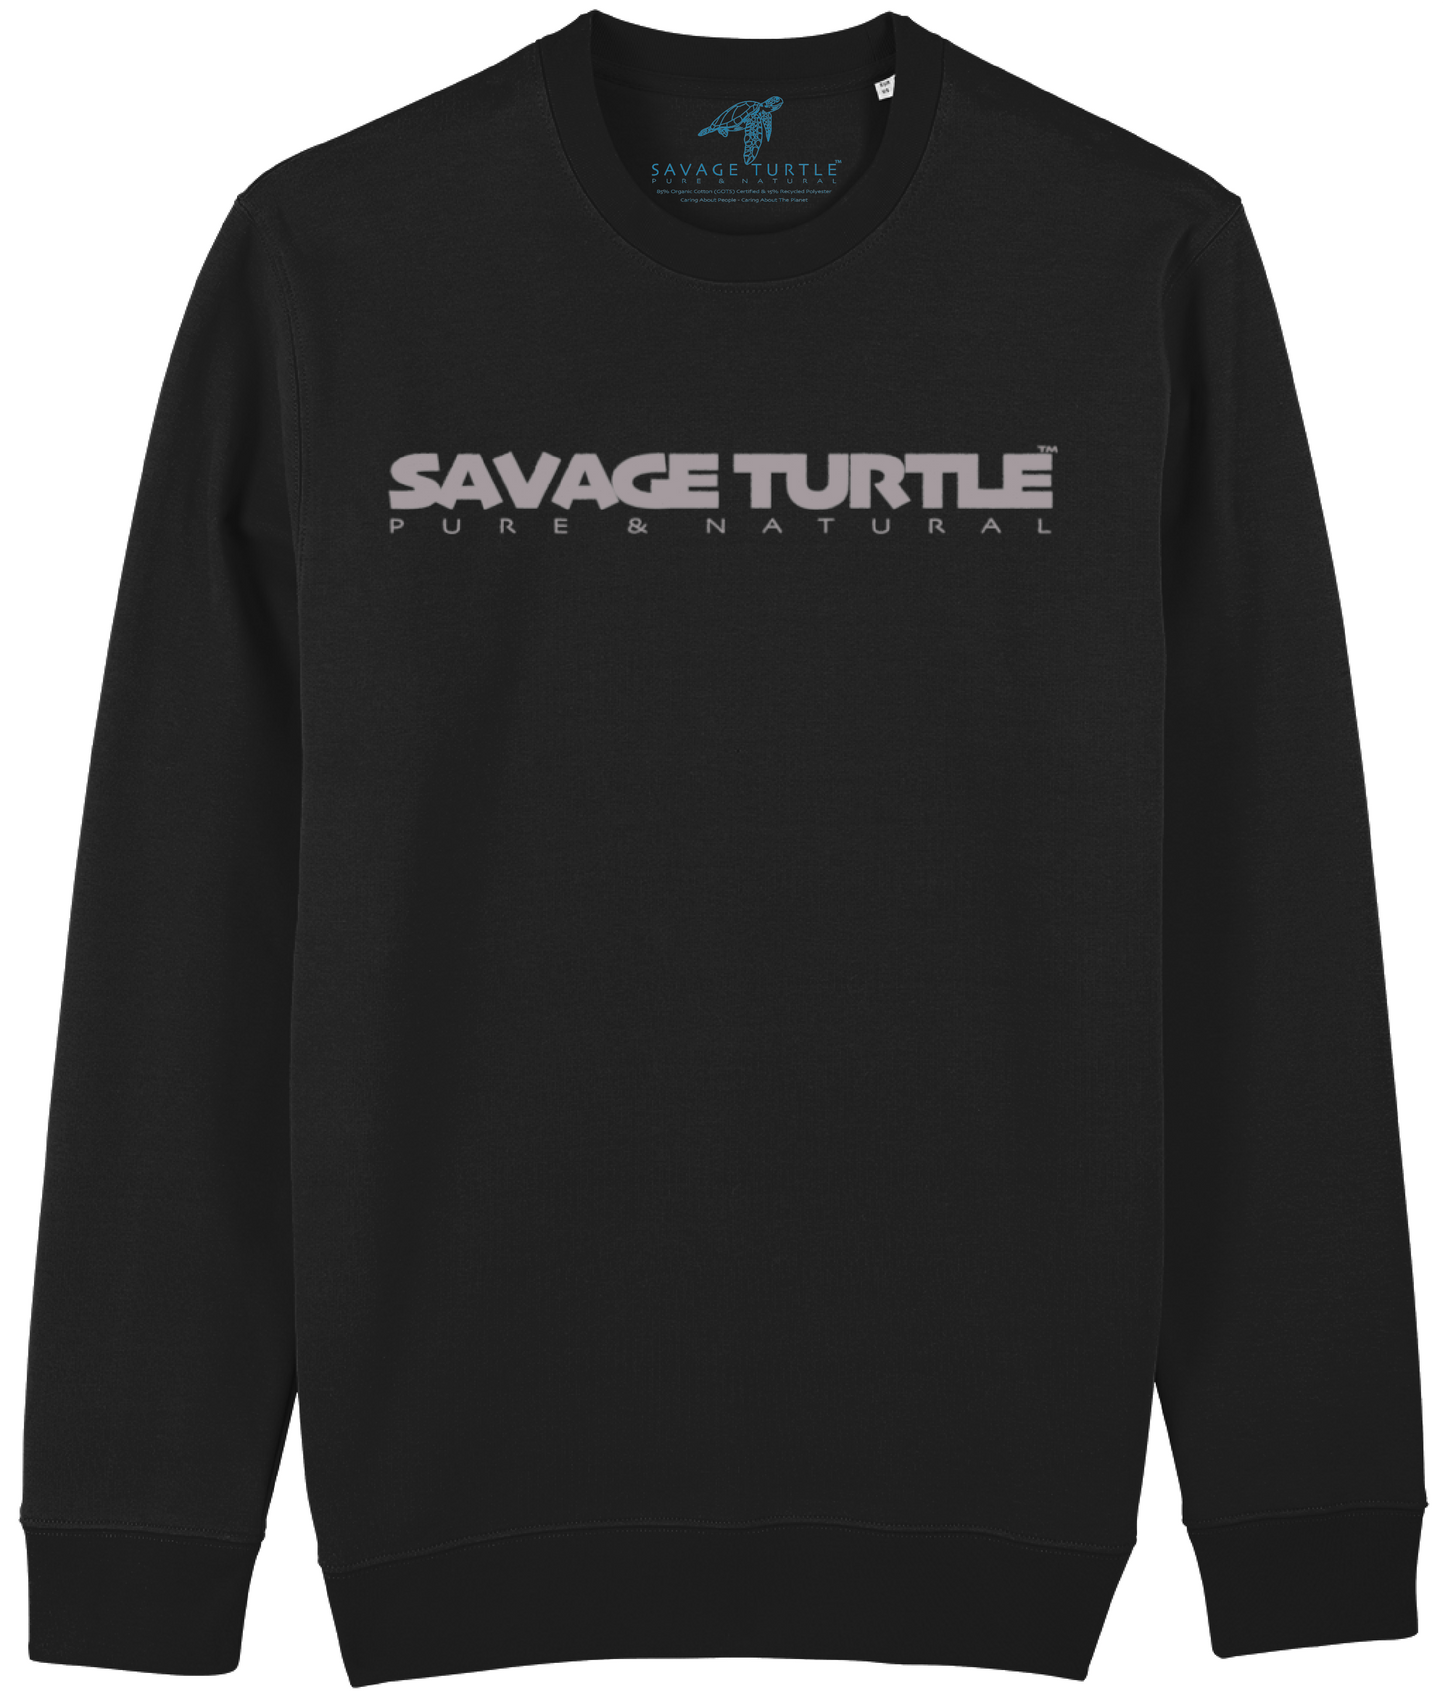 Sweater Premium Black Savage Turtle Text